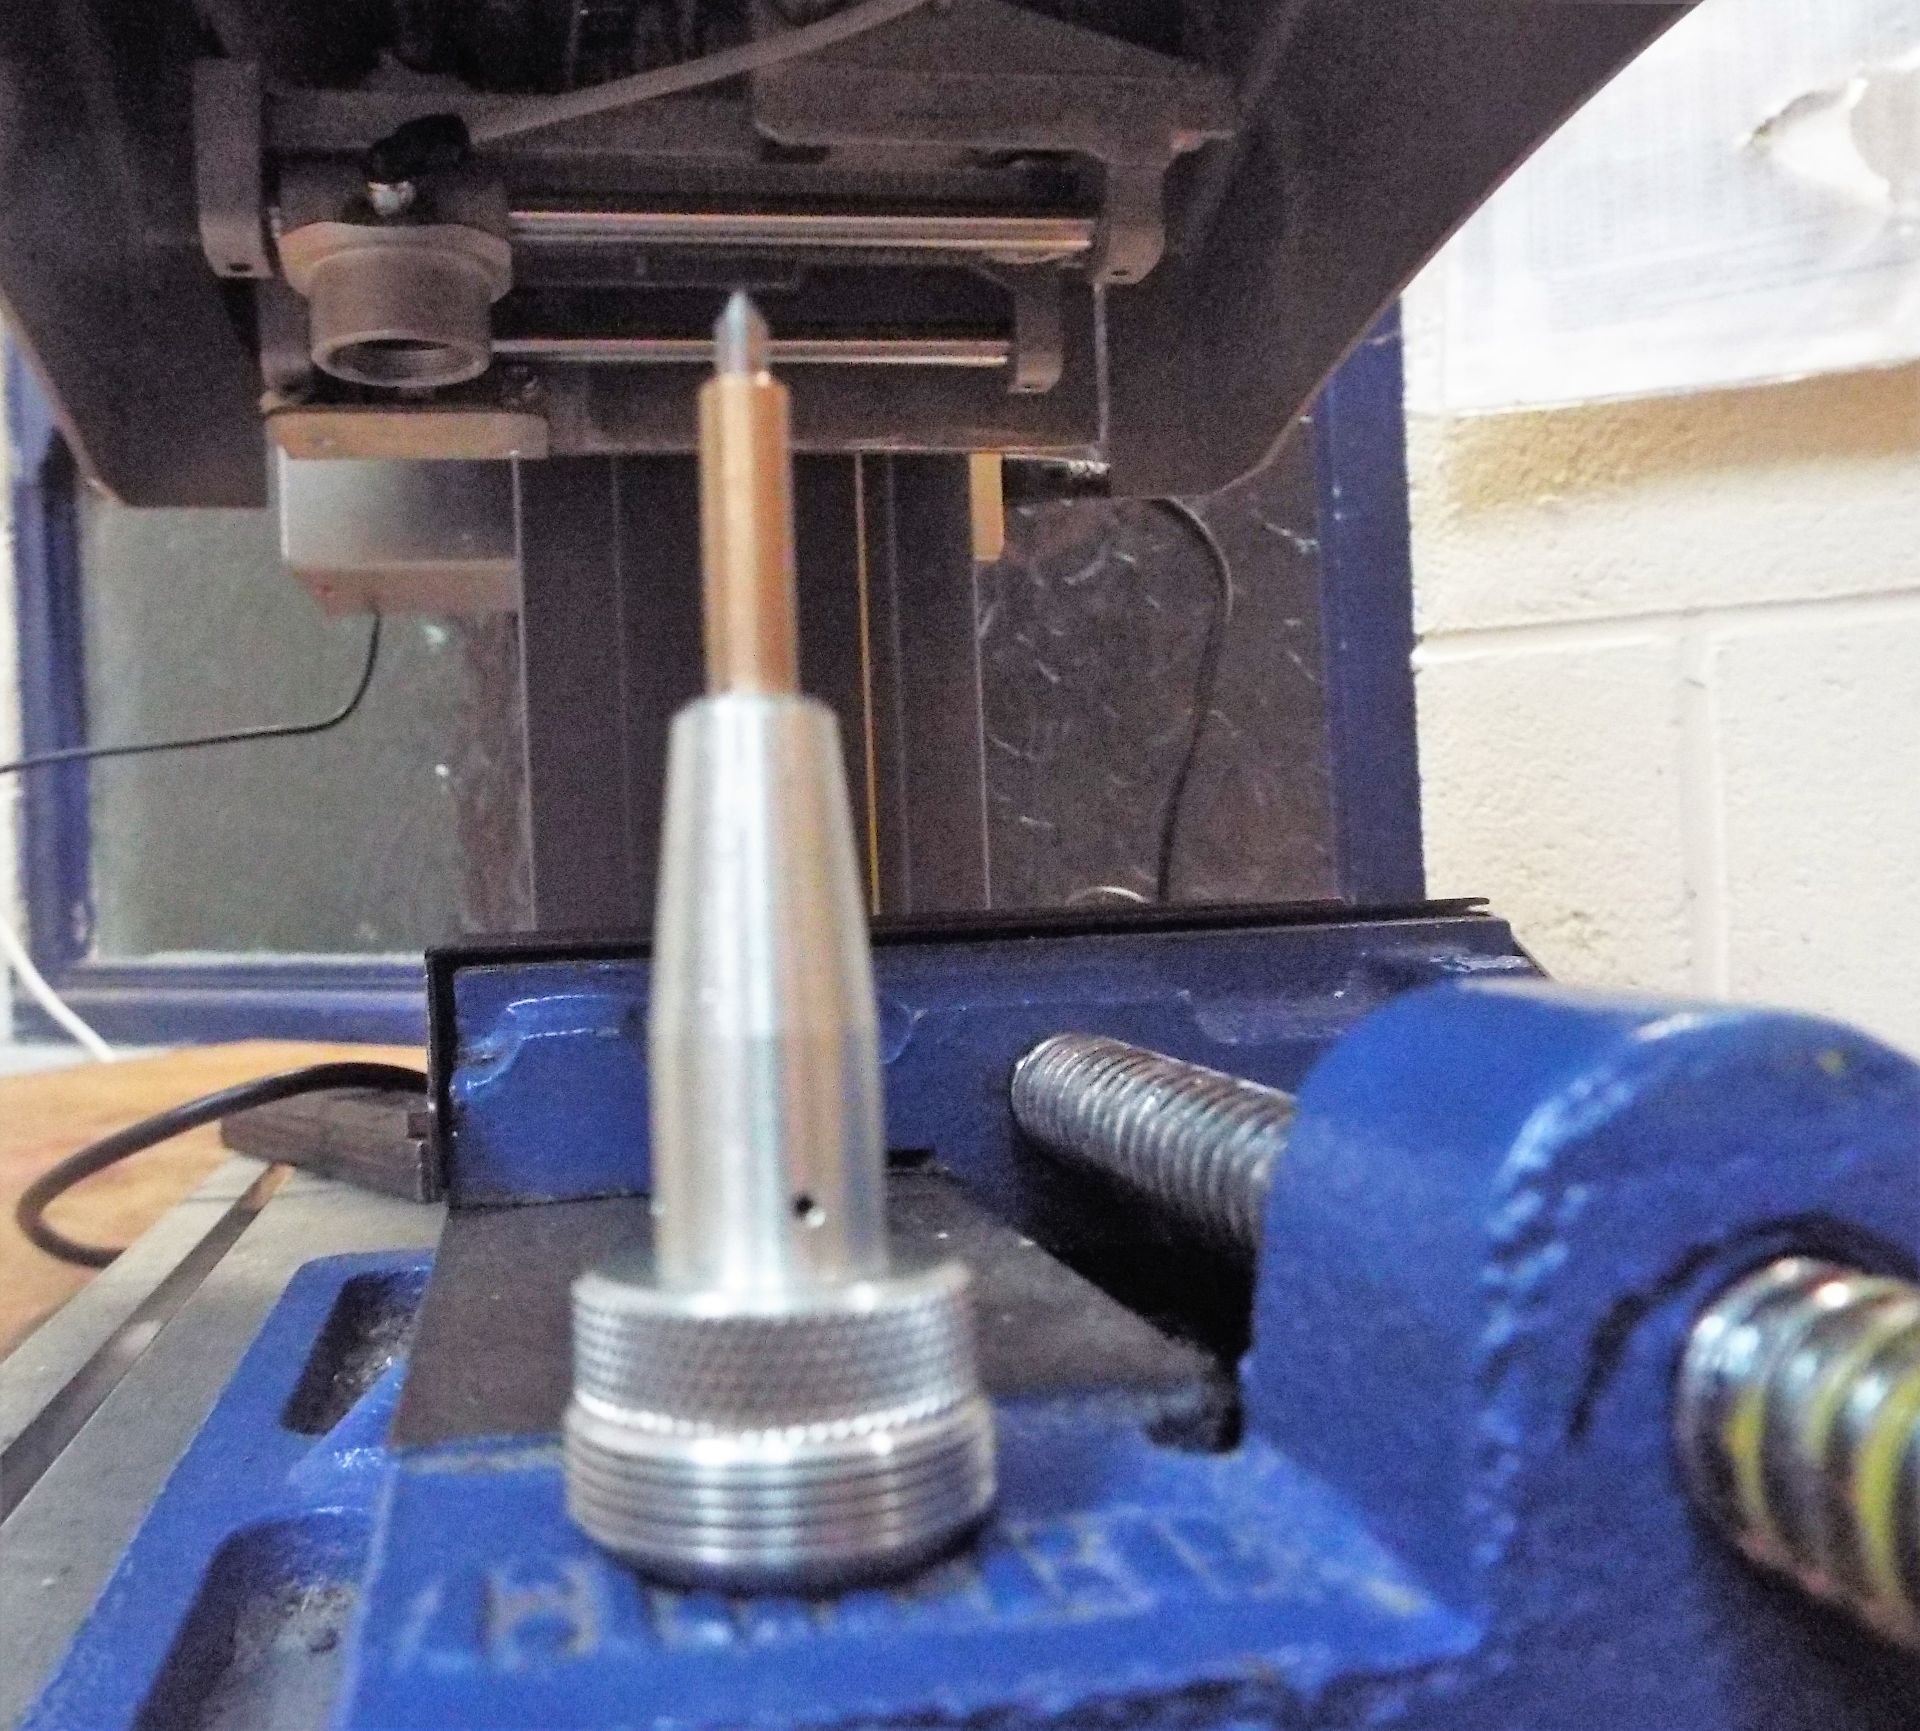 Technifor Dot Peening Parts Identifaction Machine cw Mini Compressor & Spare Stylus - Image 7 of 13